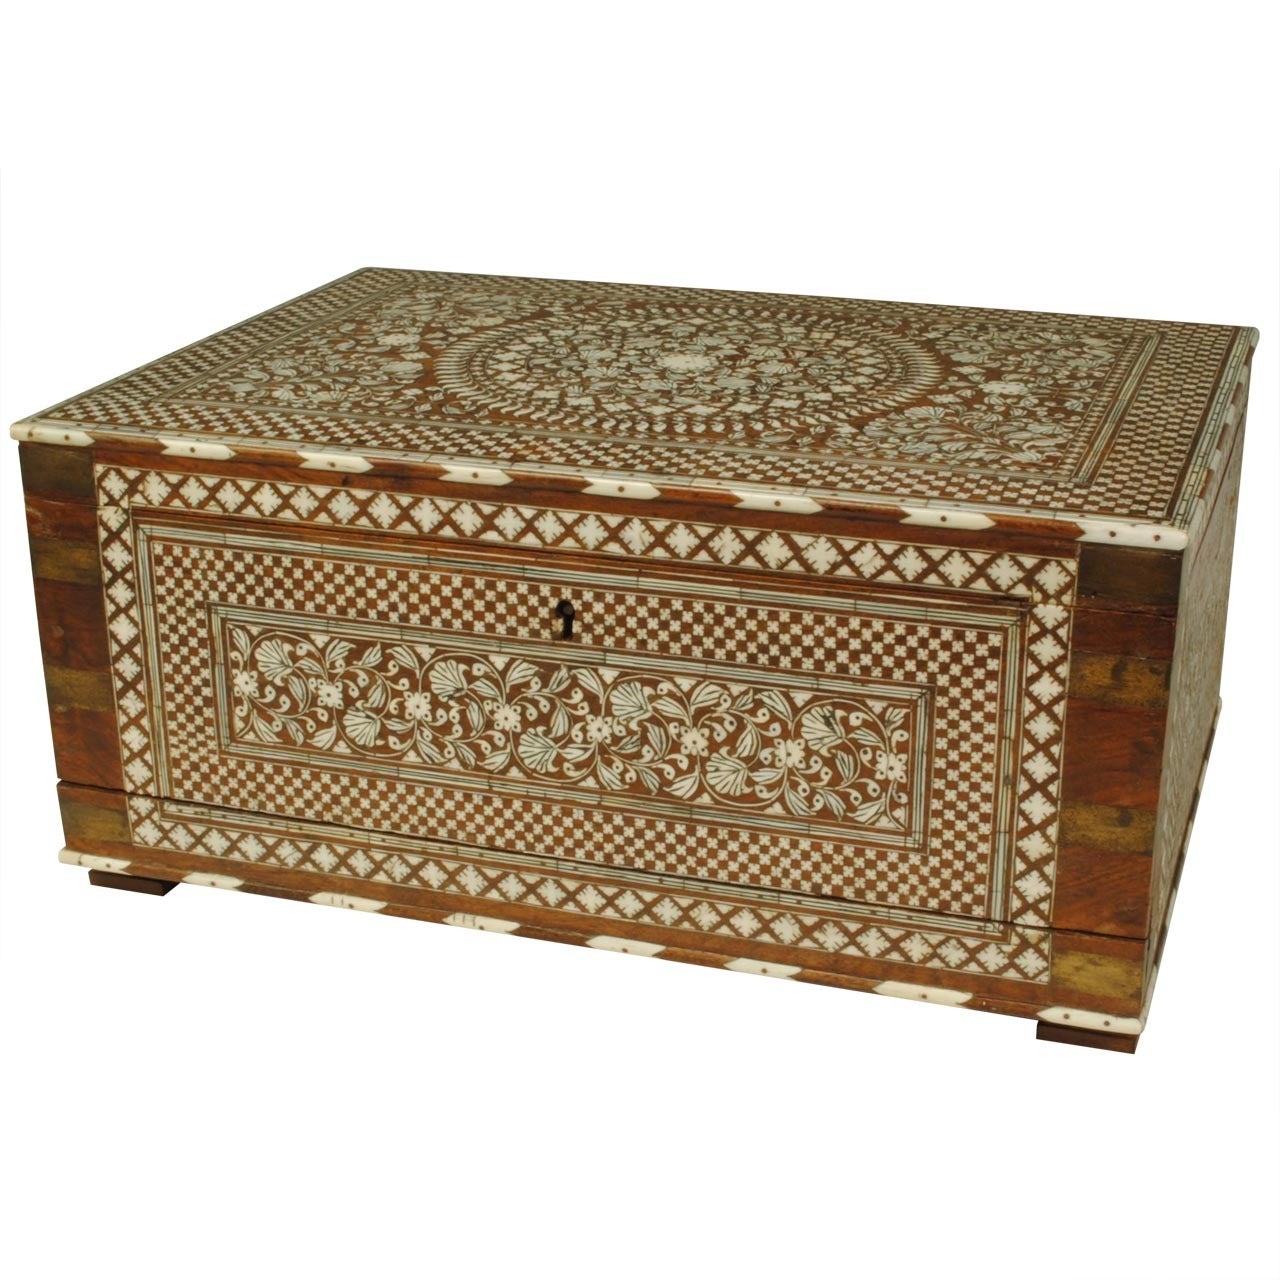 Indian Ivory inlaid writing box